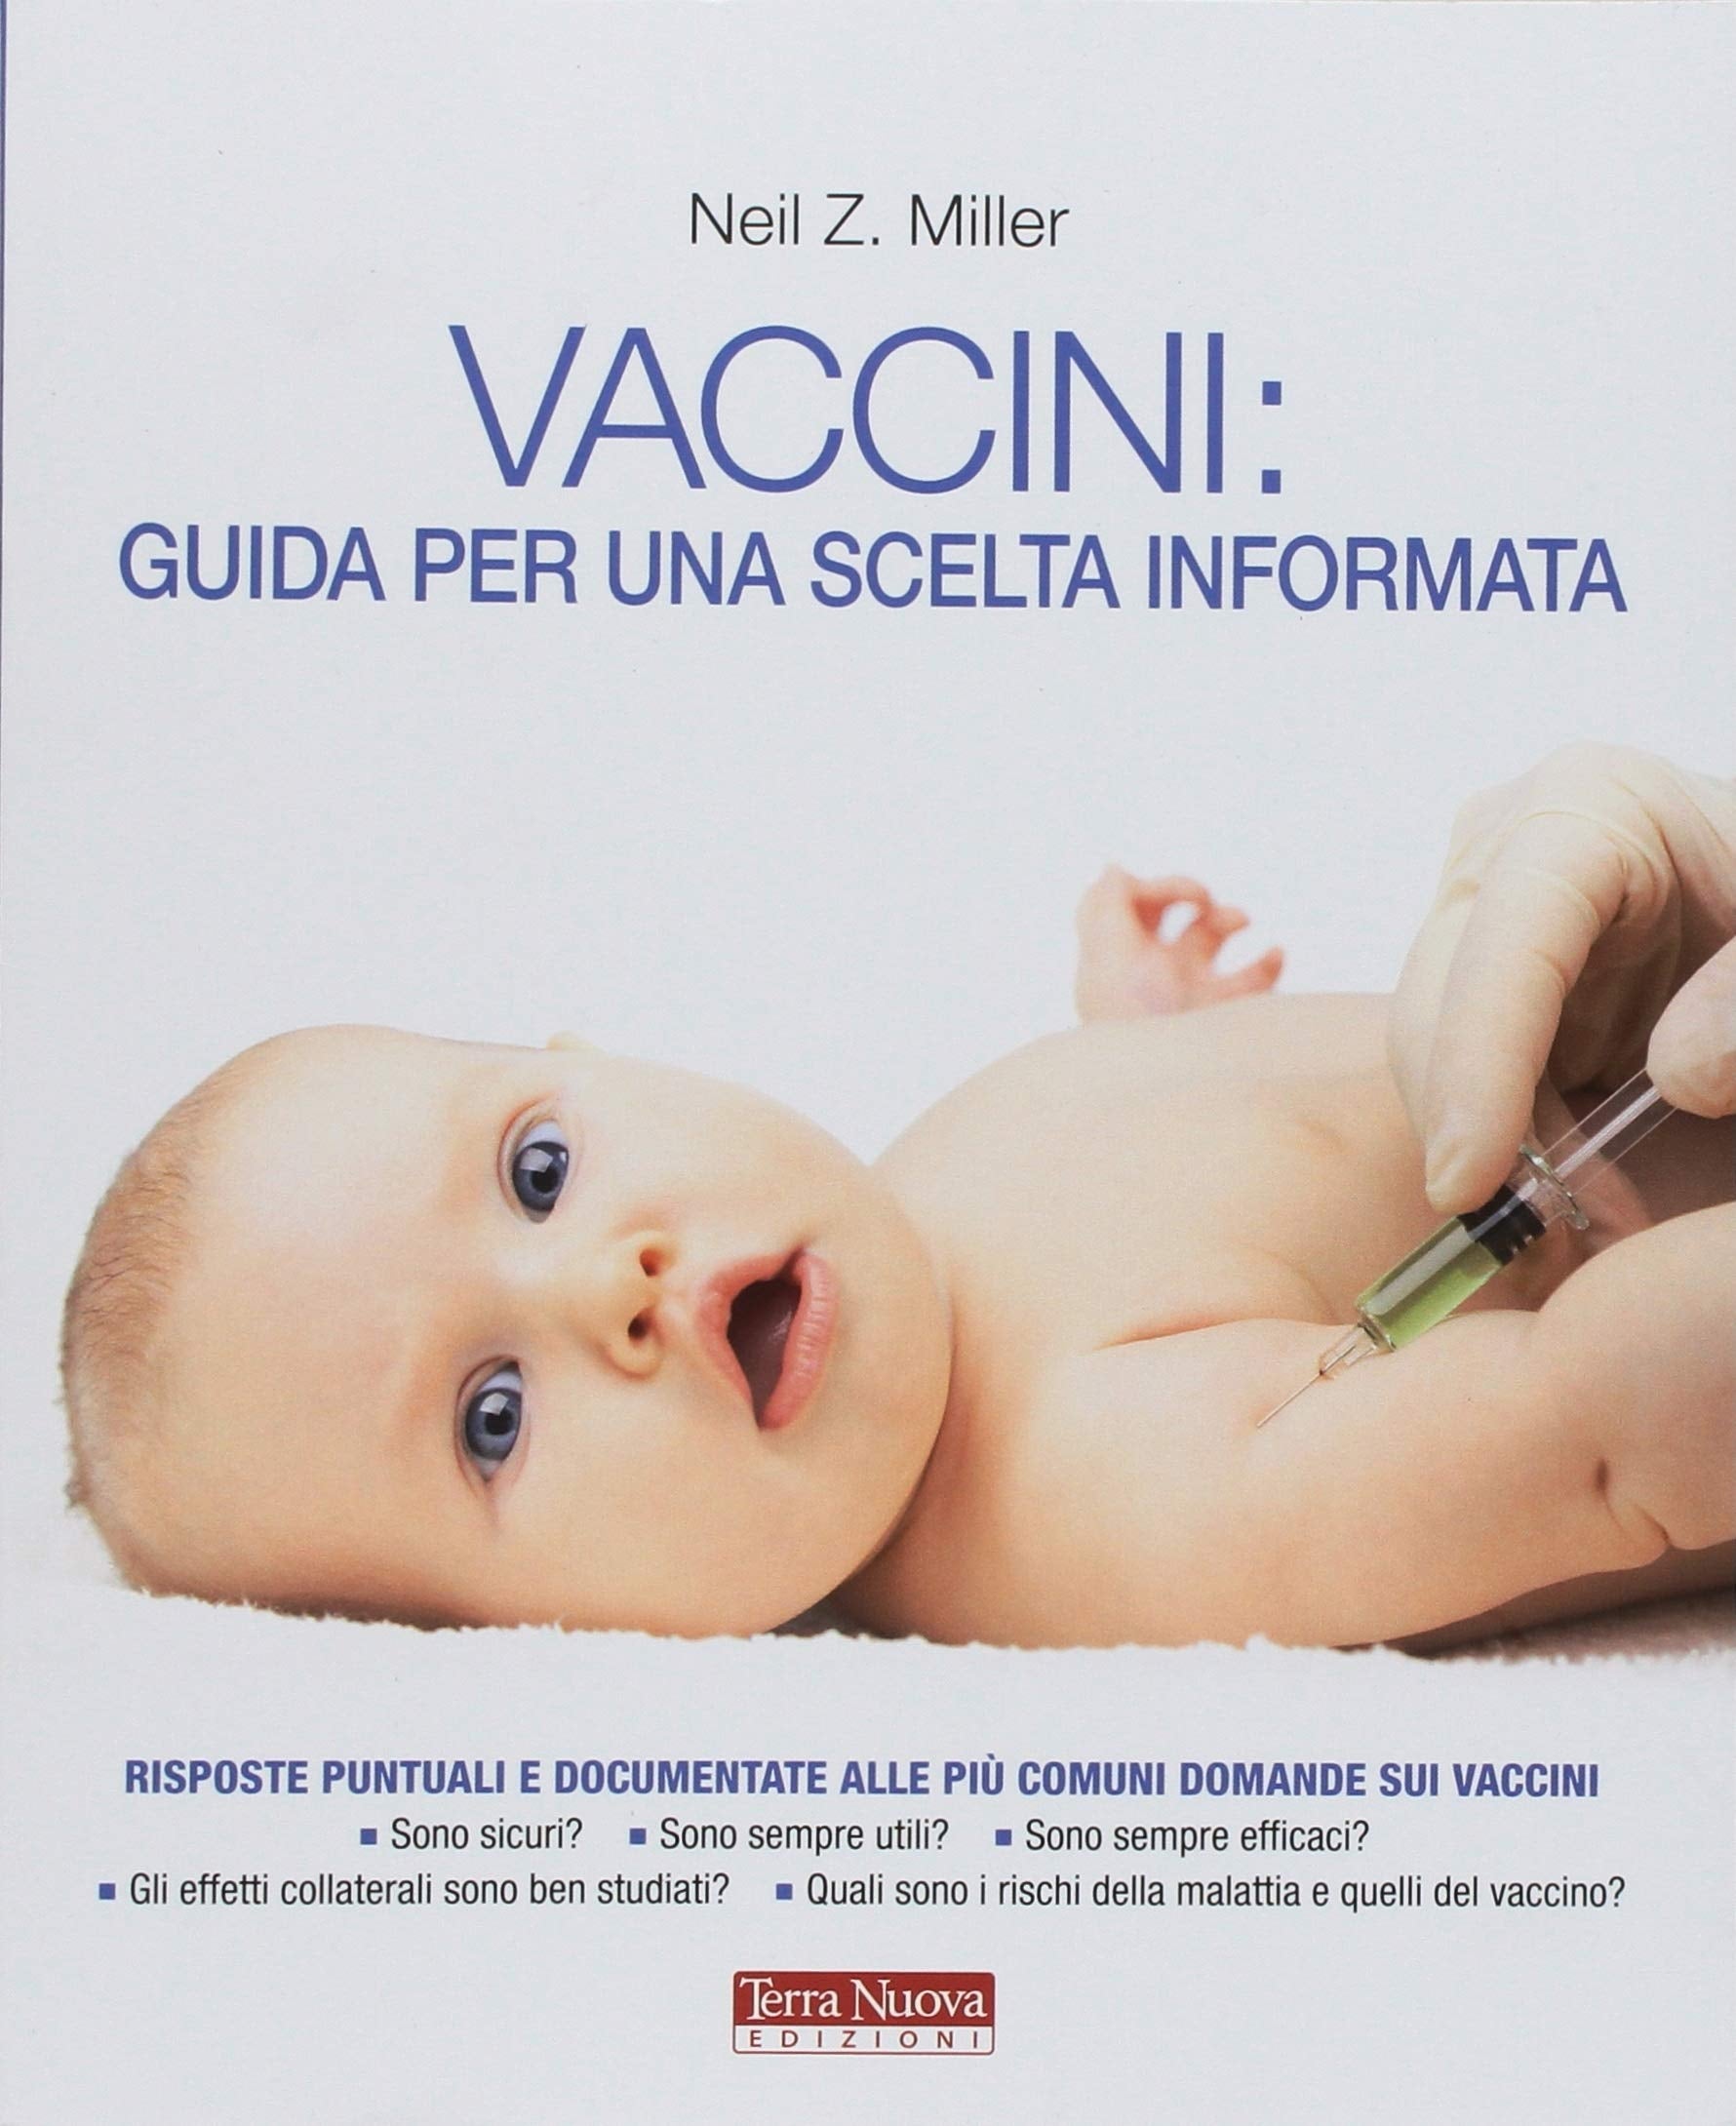 Vaccini guida per ina scelta informata - Neil Z. Miller